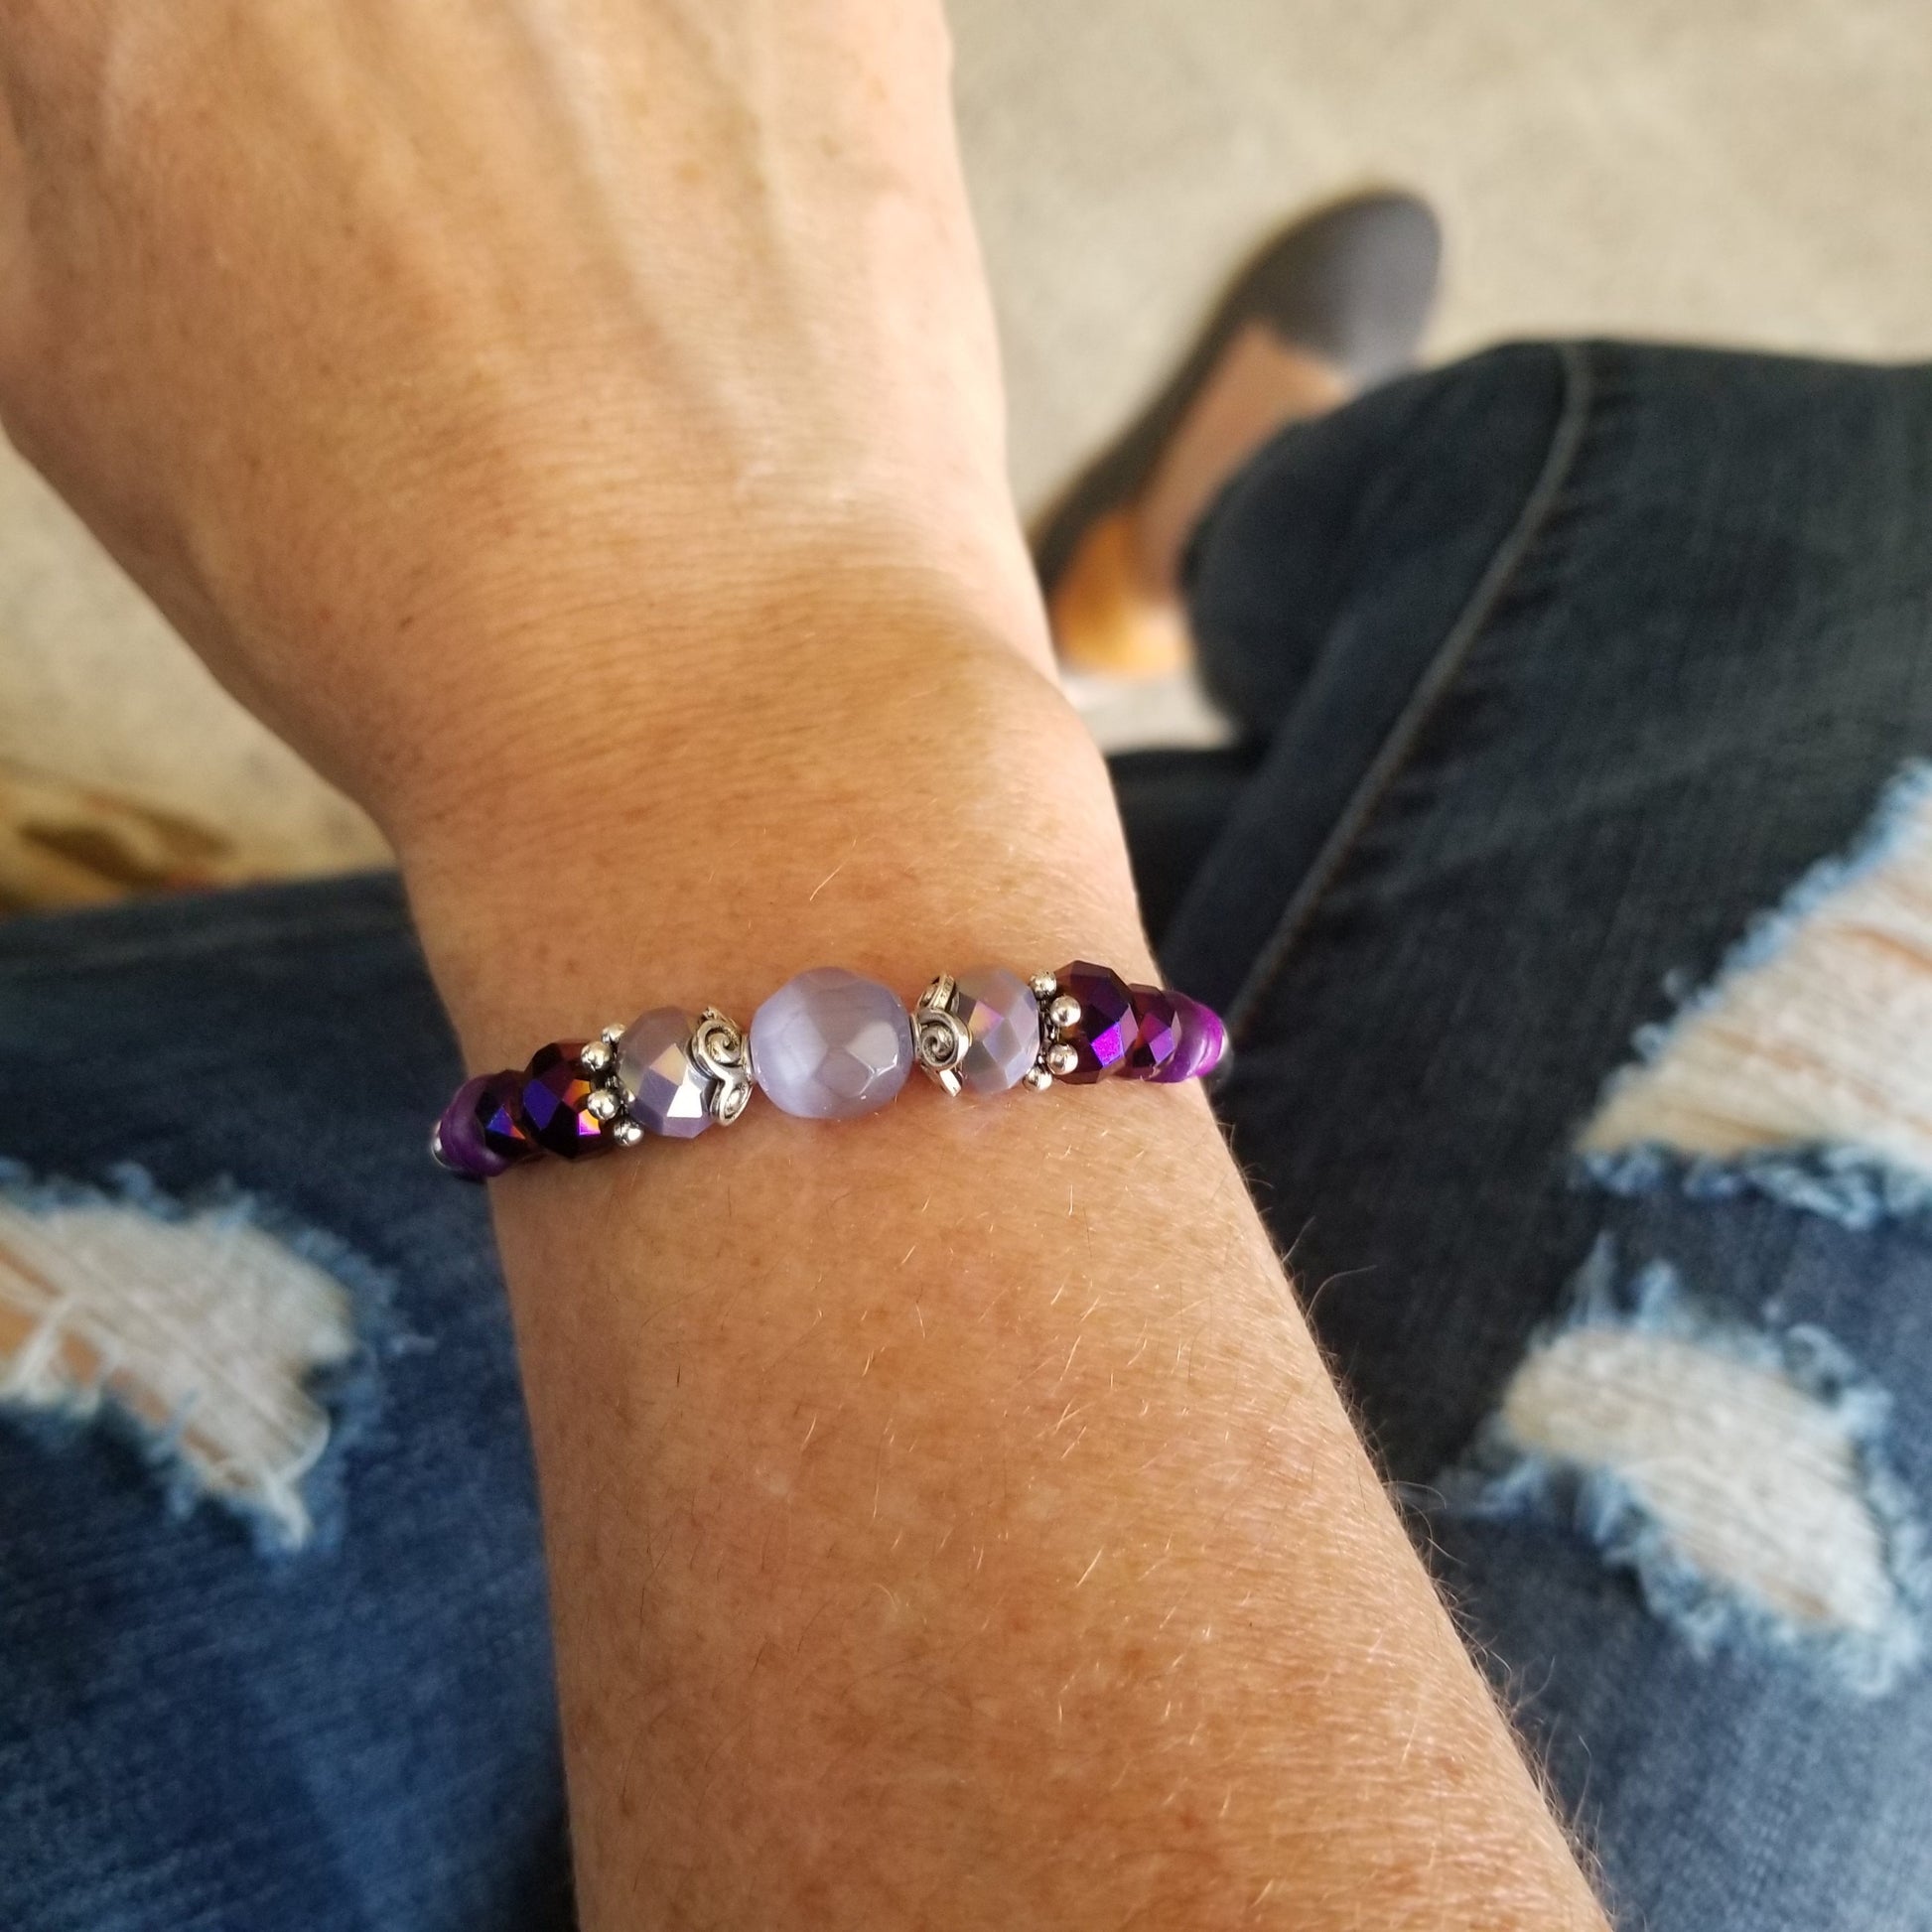 light purple cats eye and glass beads wrap bracelet on wrist